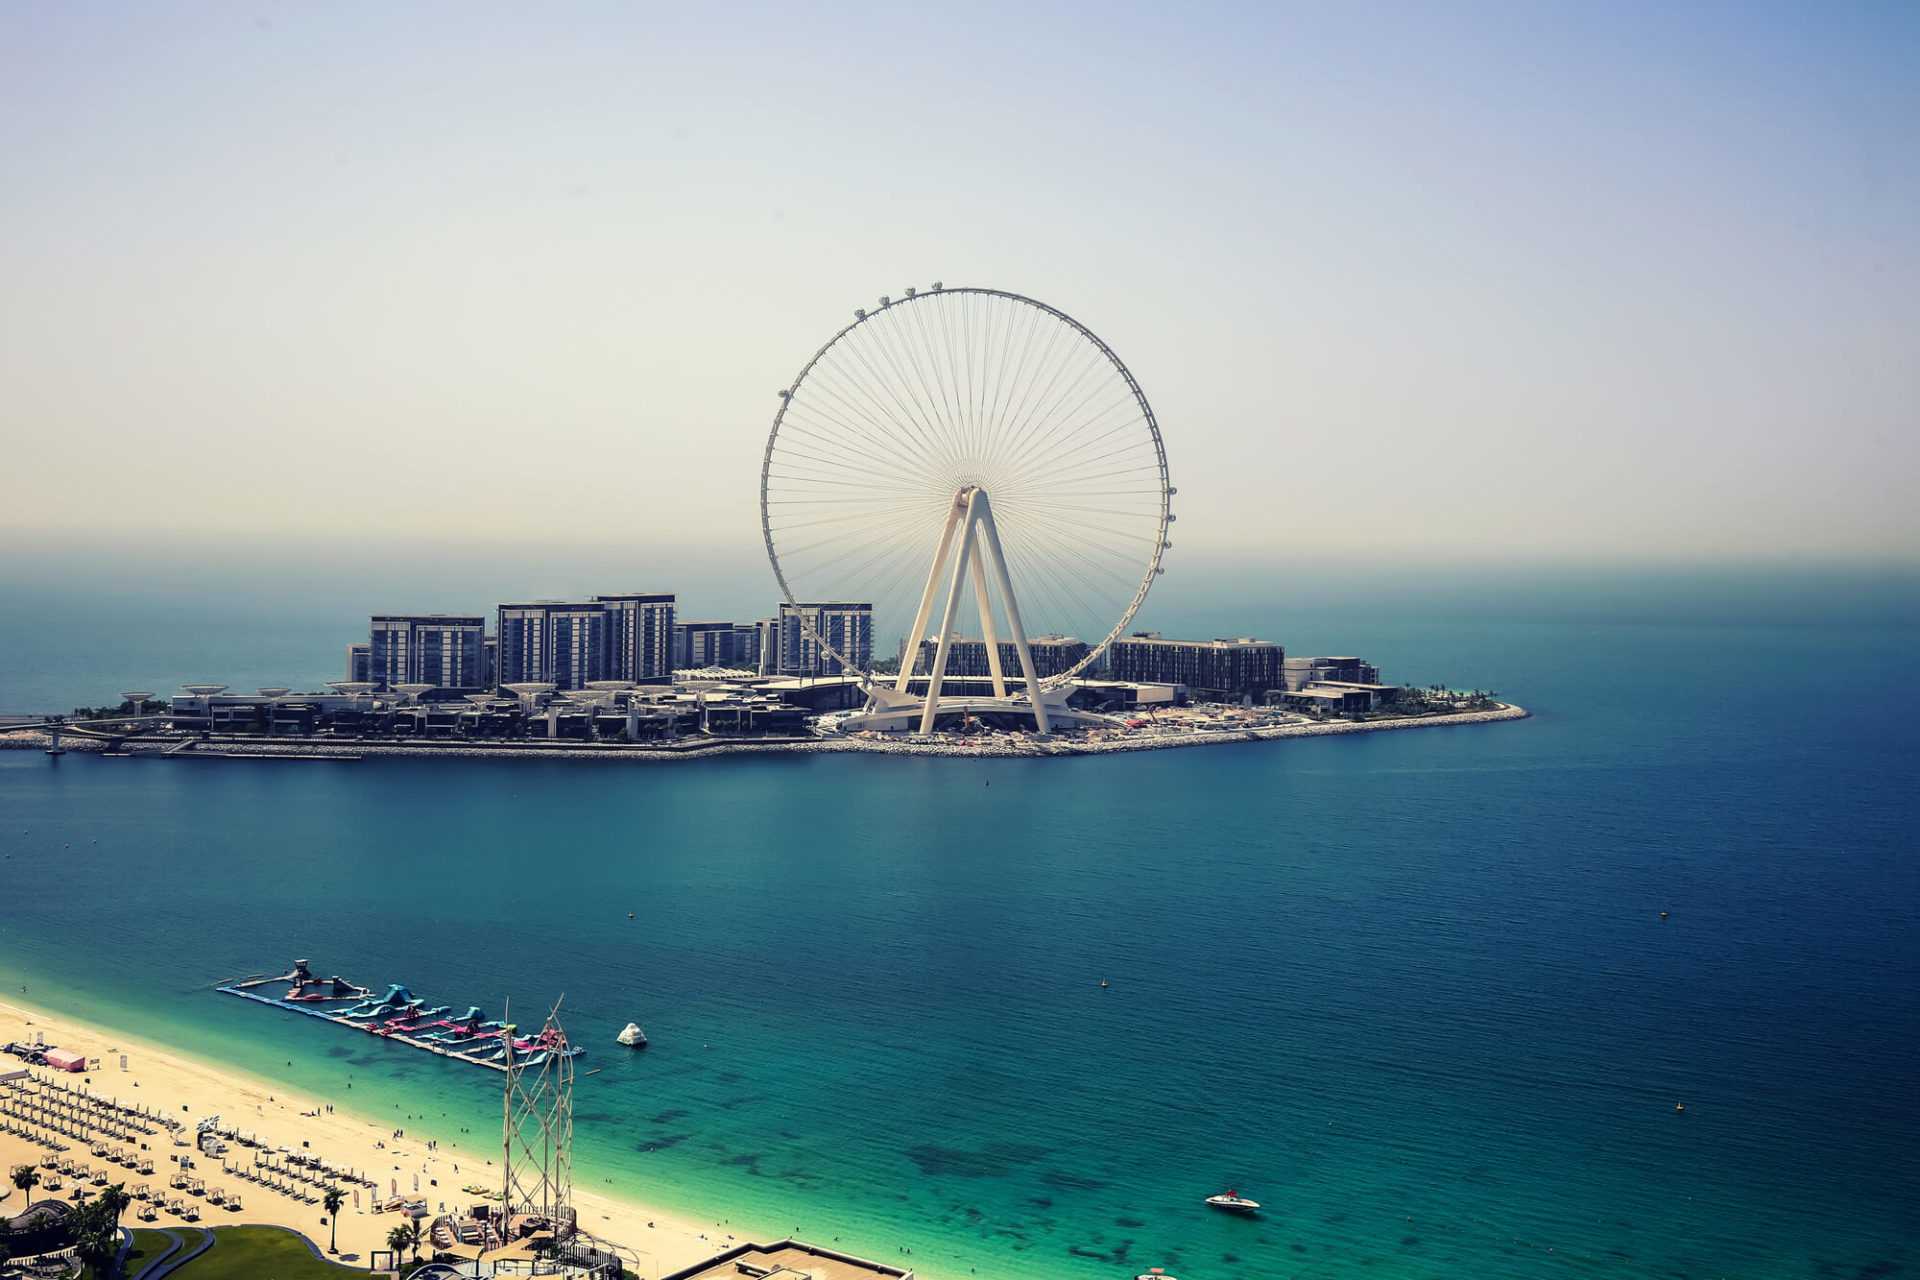 Ain Dubai ferris wheel ticket price 2022 and how to skip the lines?